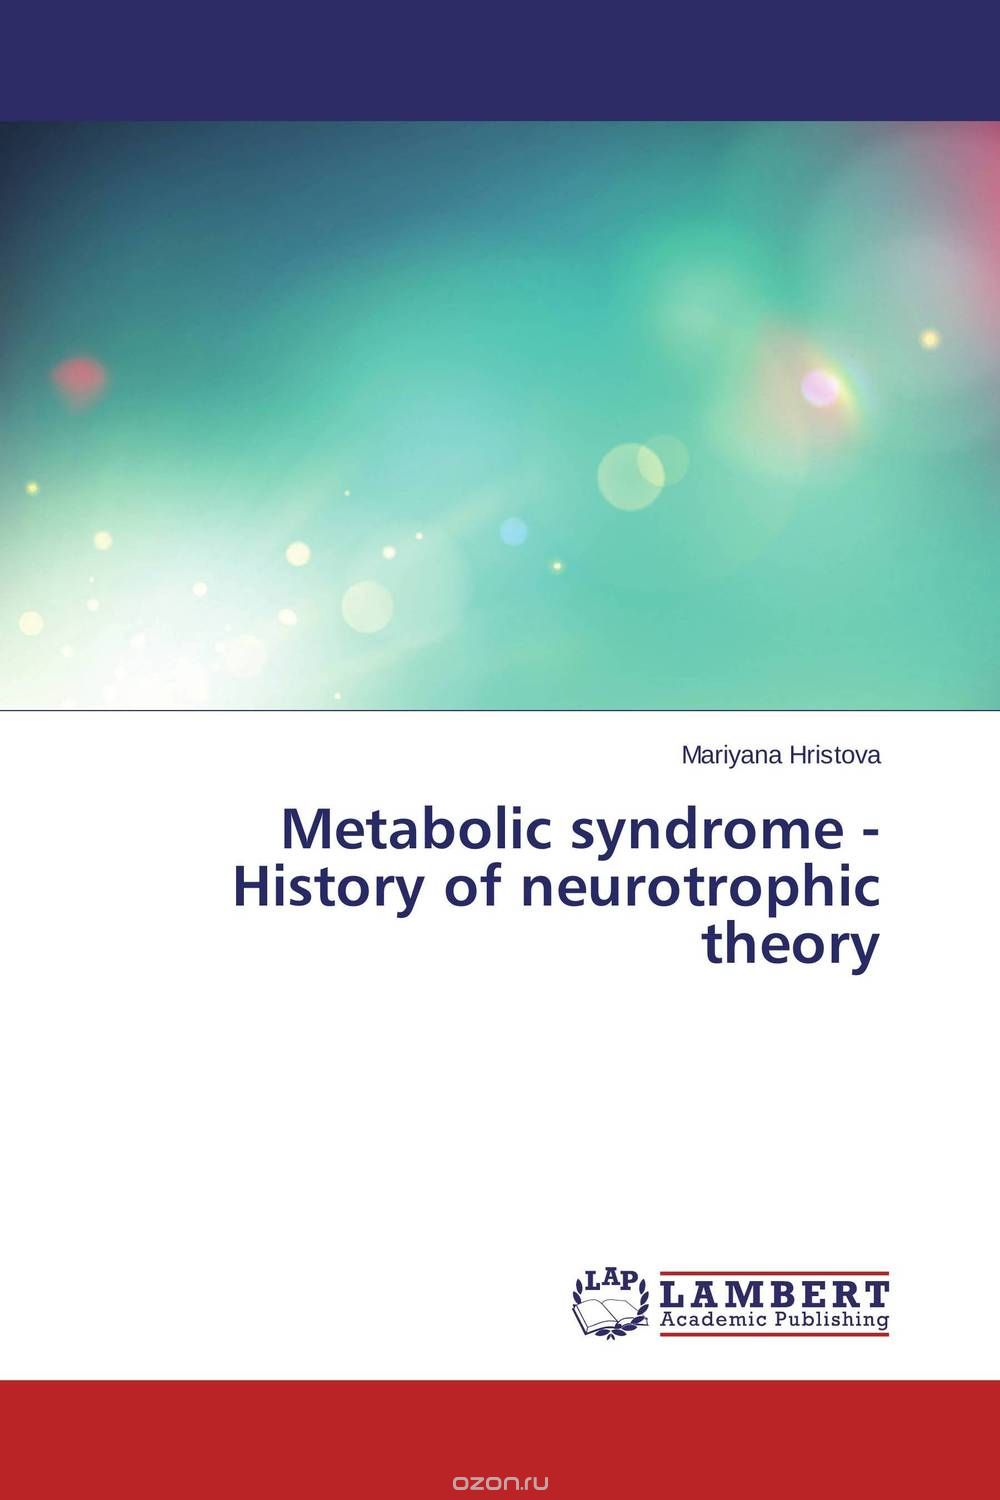 Скачать книгу "Metabolic syndrome - History of neurotrophic theory"